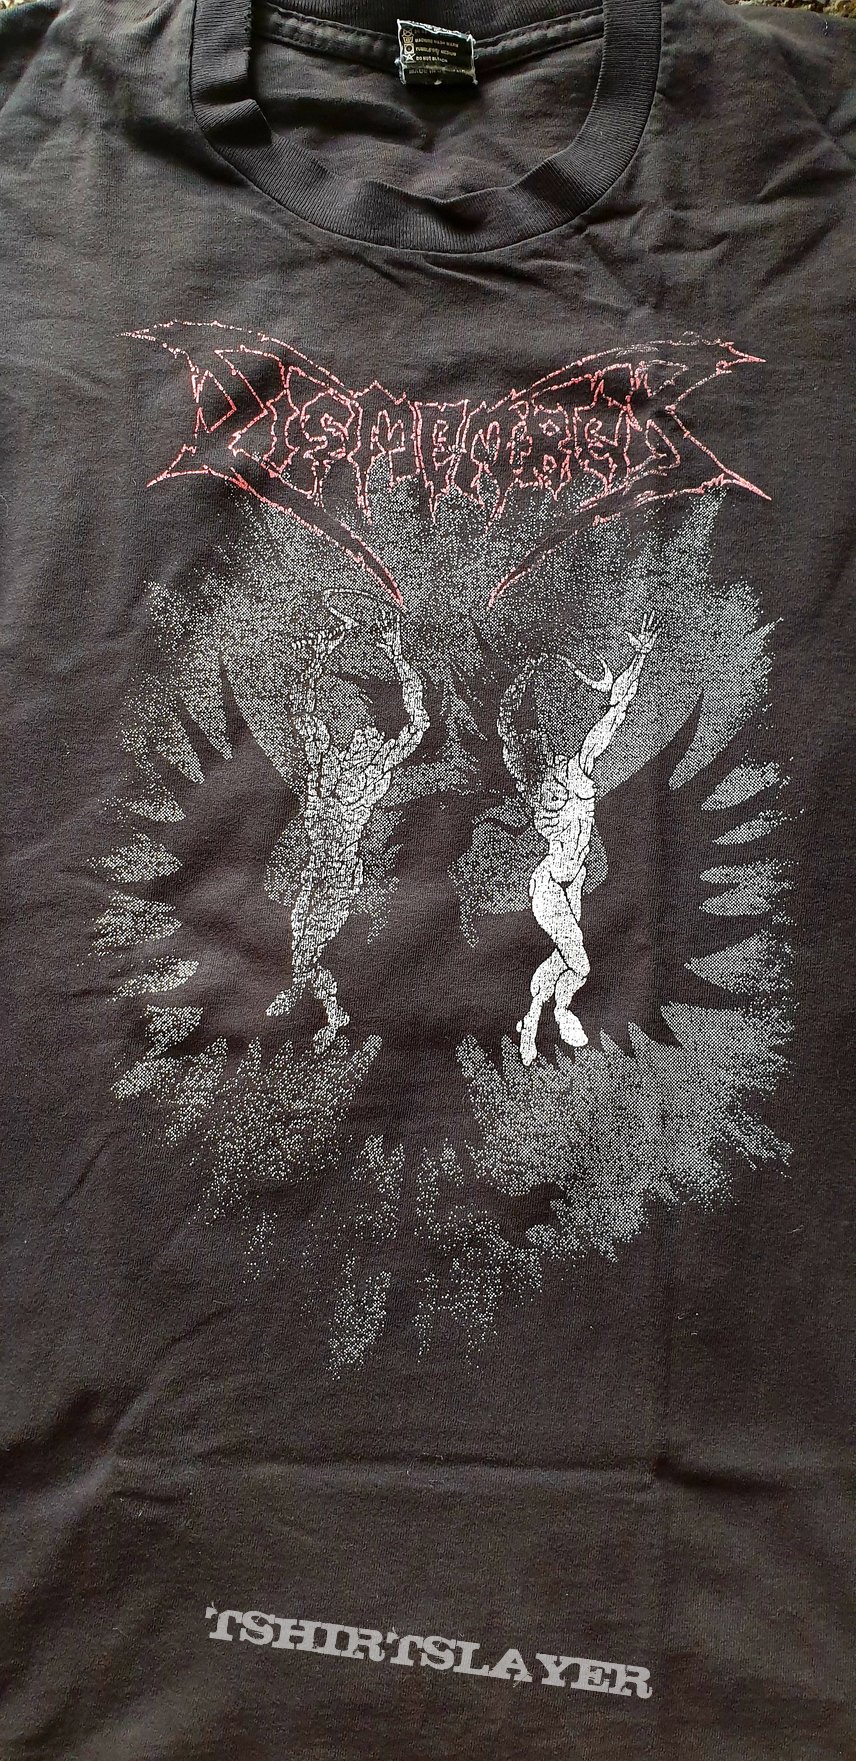 Dismember- I Wish You Hell, original Tour LS,1991